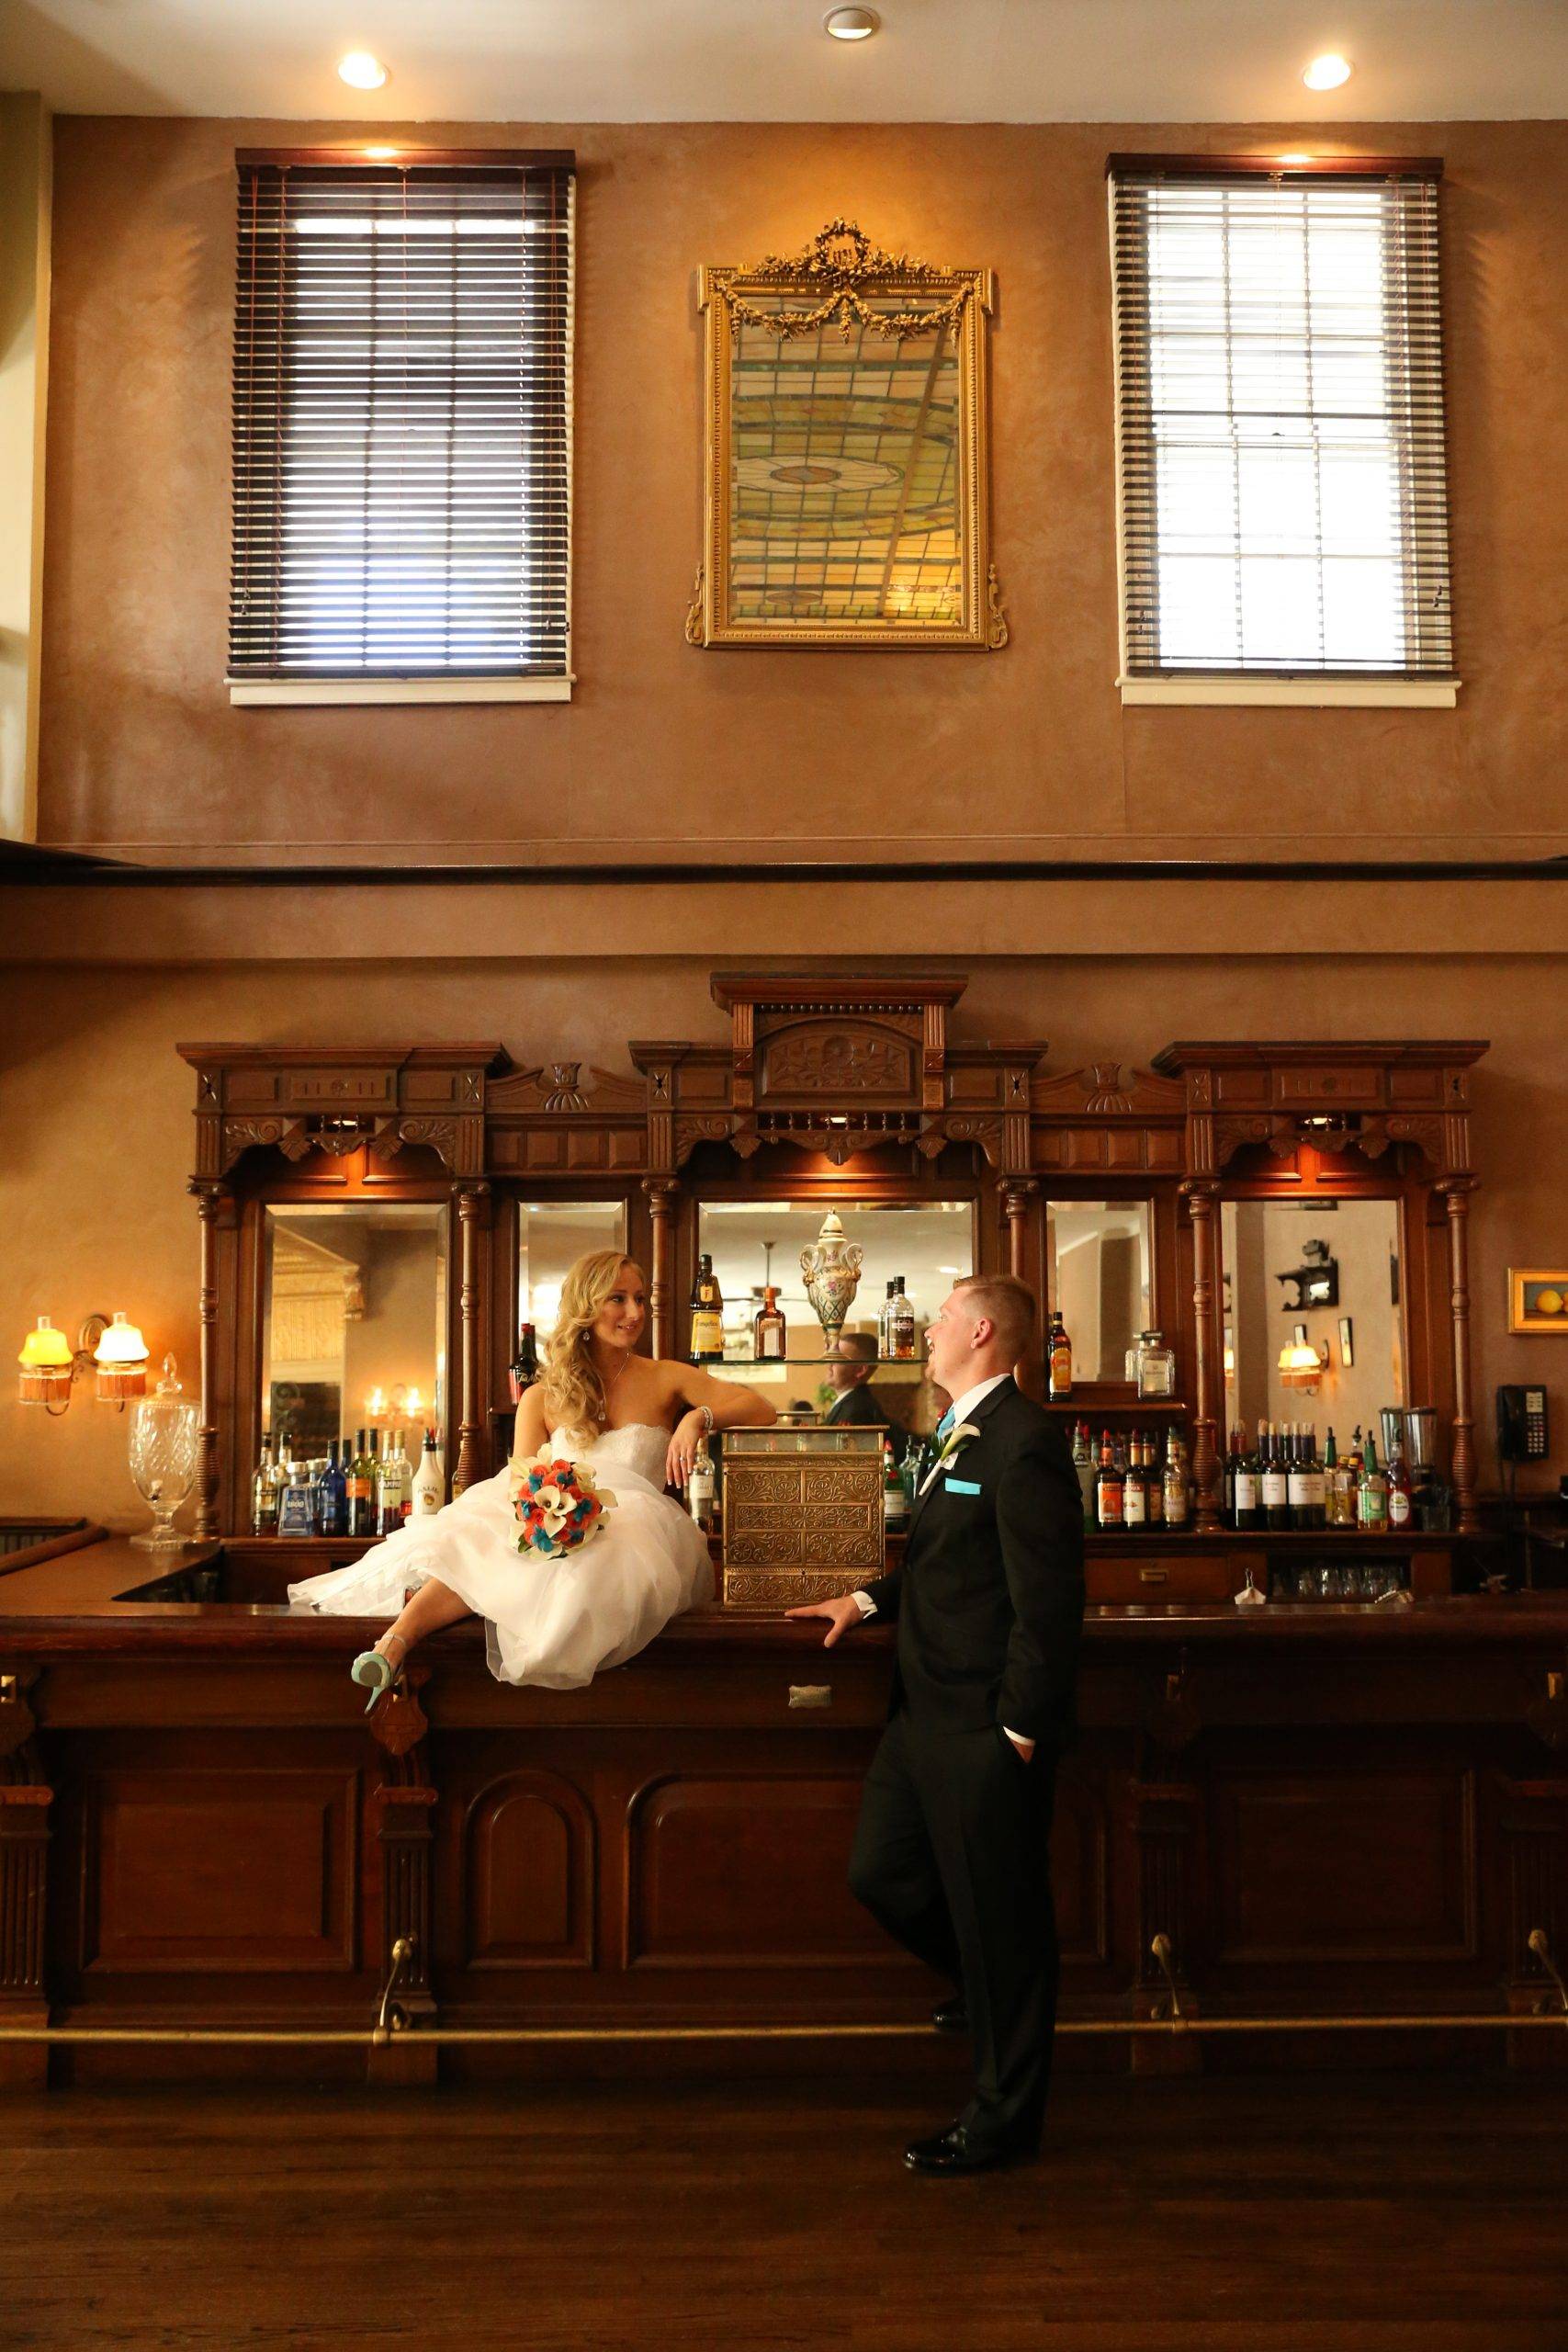 A bride and groom posing at a bar.